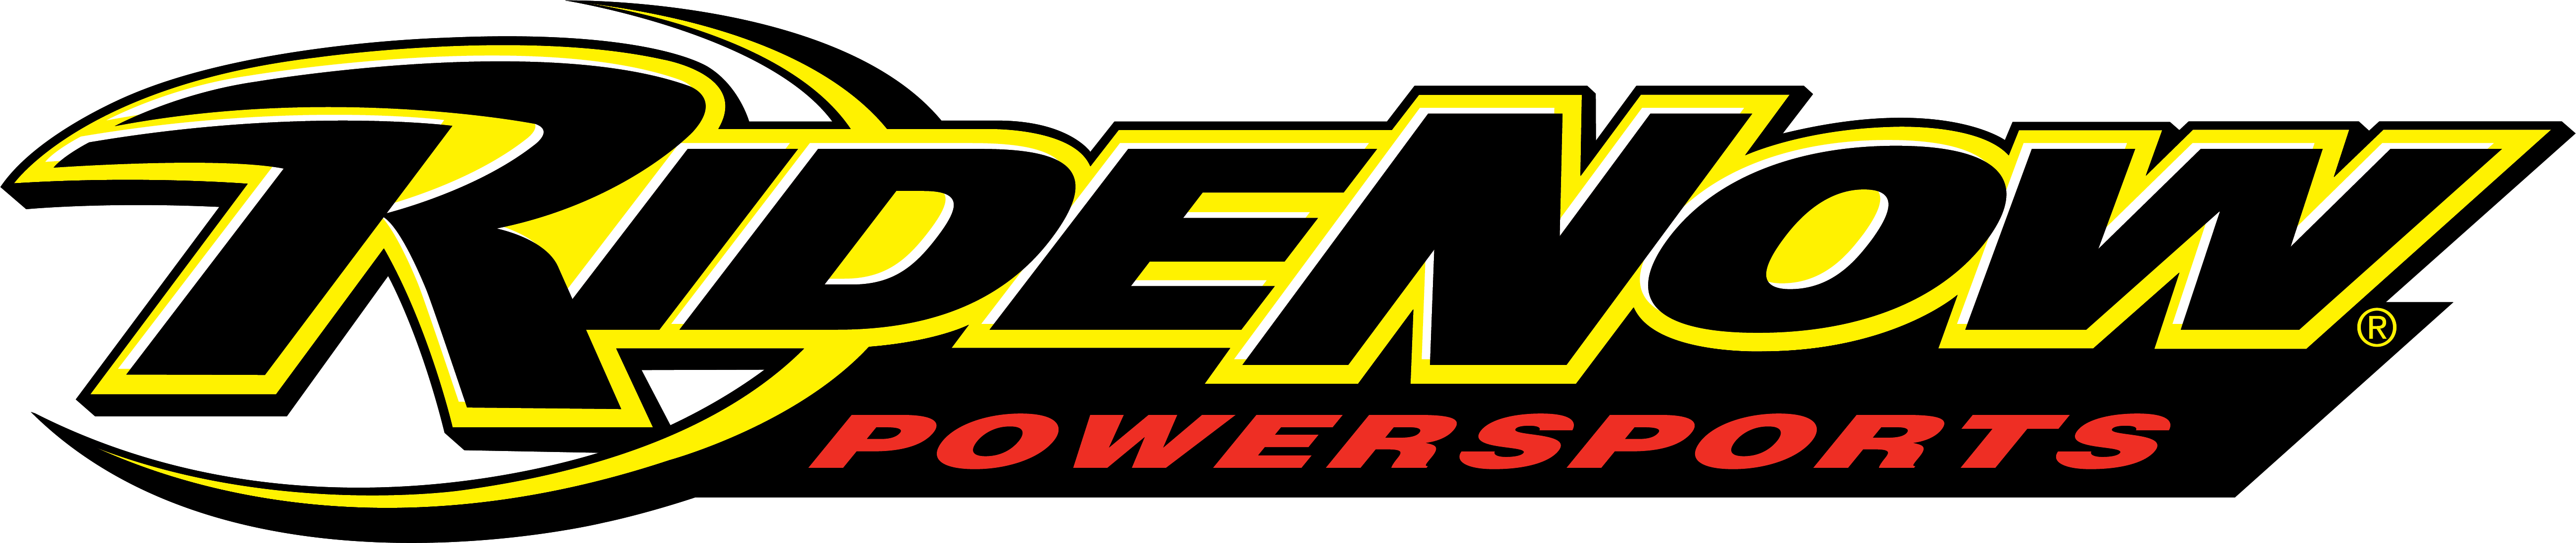 RideNow Powersports Blog - Logo